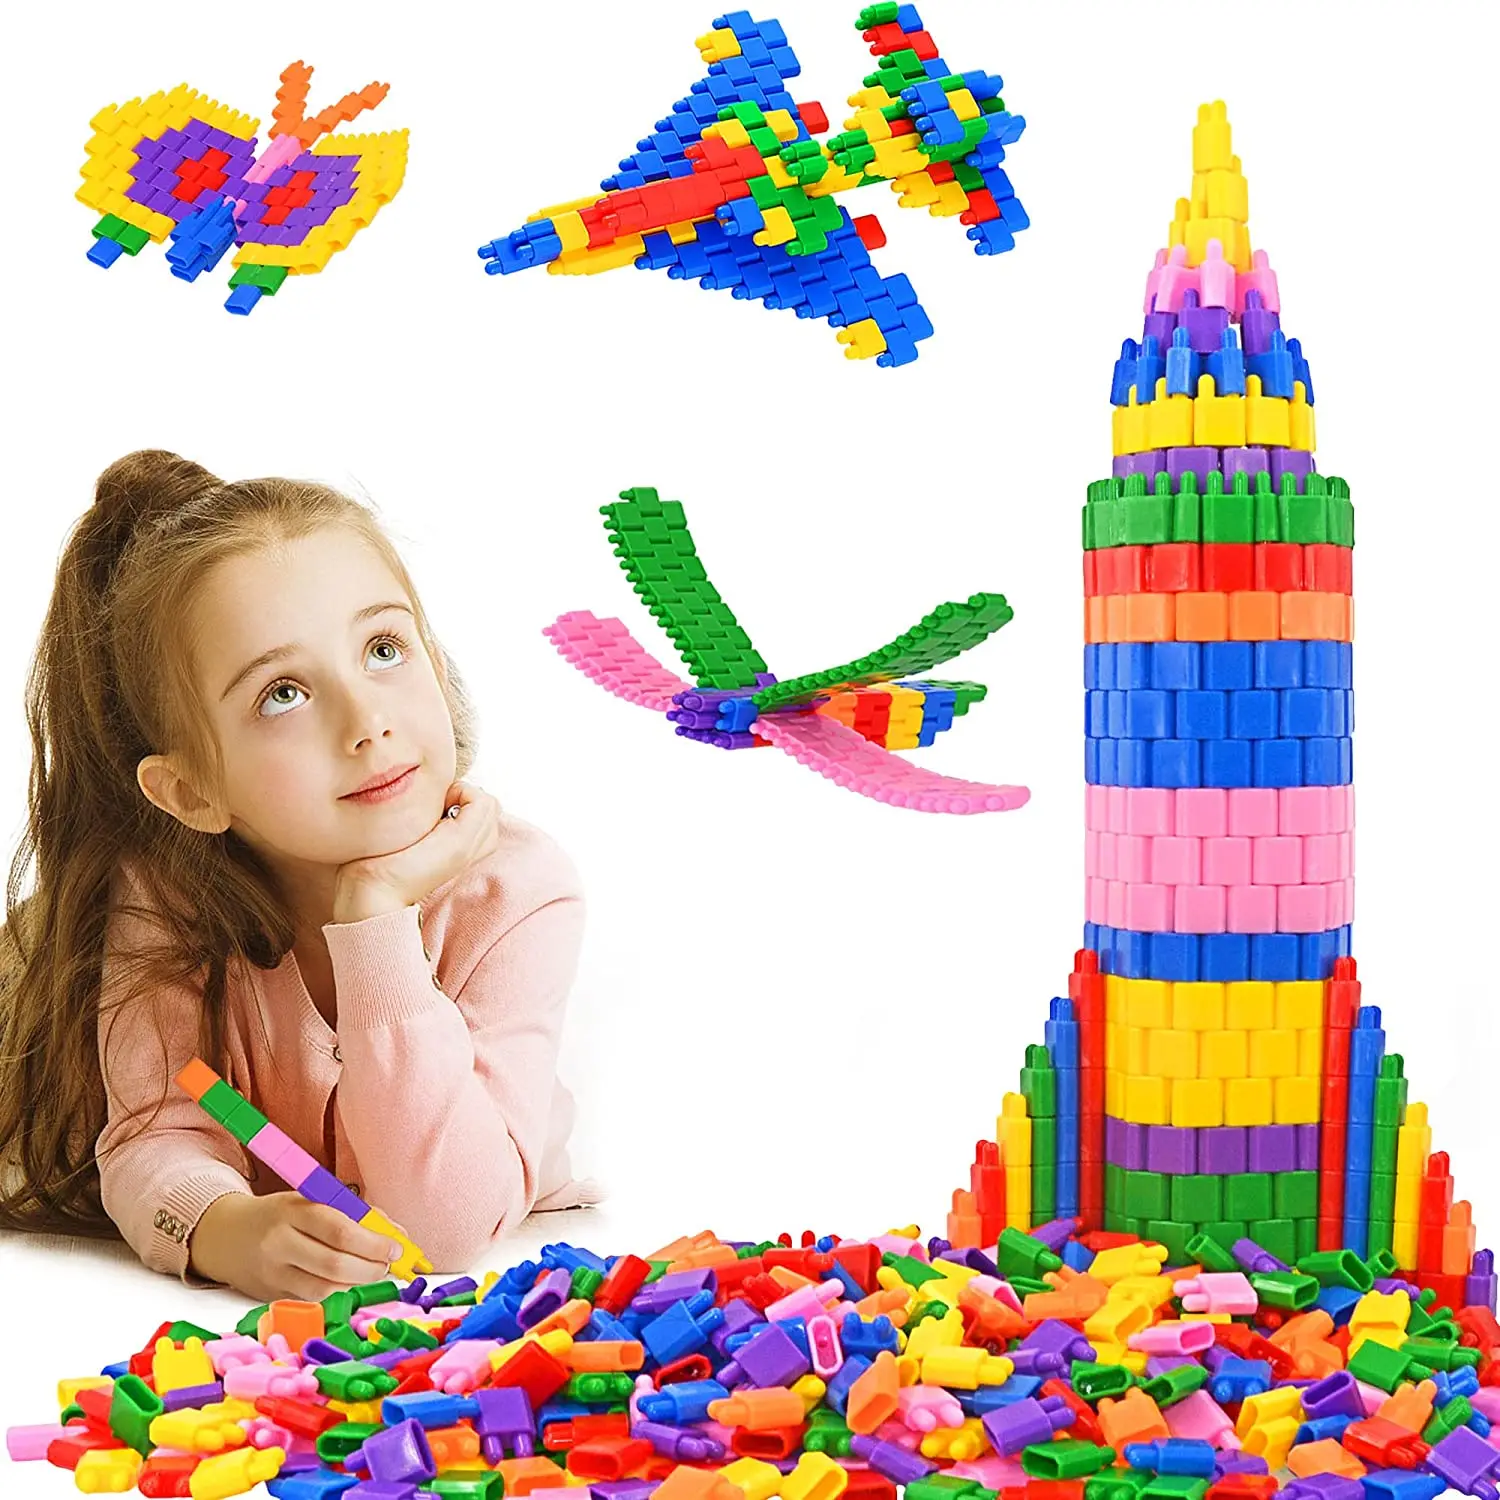 

Kids Building Blocks Construction Toy Learning Playset STEM Toy Educational Child Brain Development Preschool Kindergarten Toy